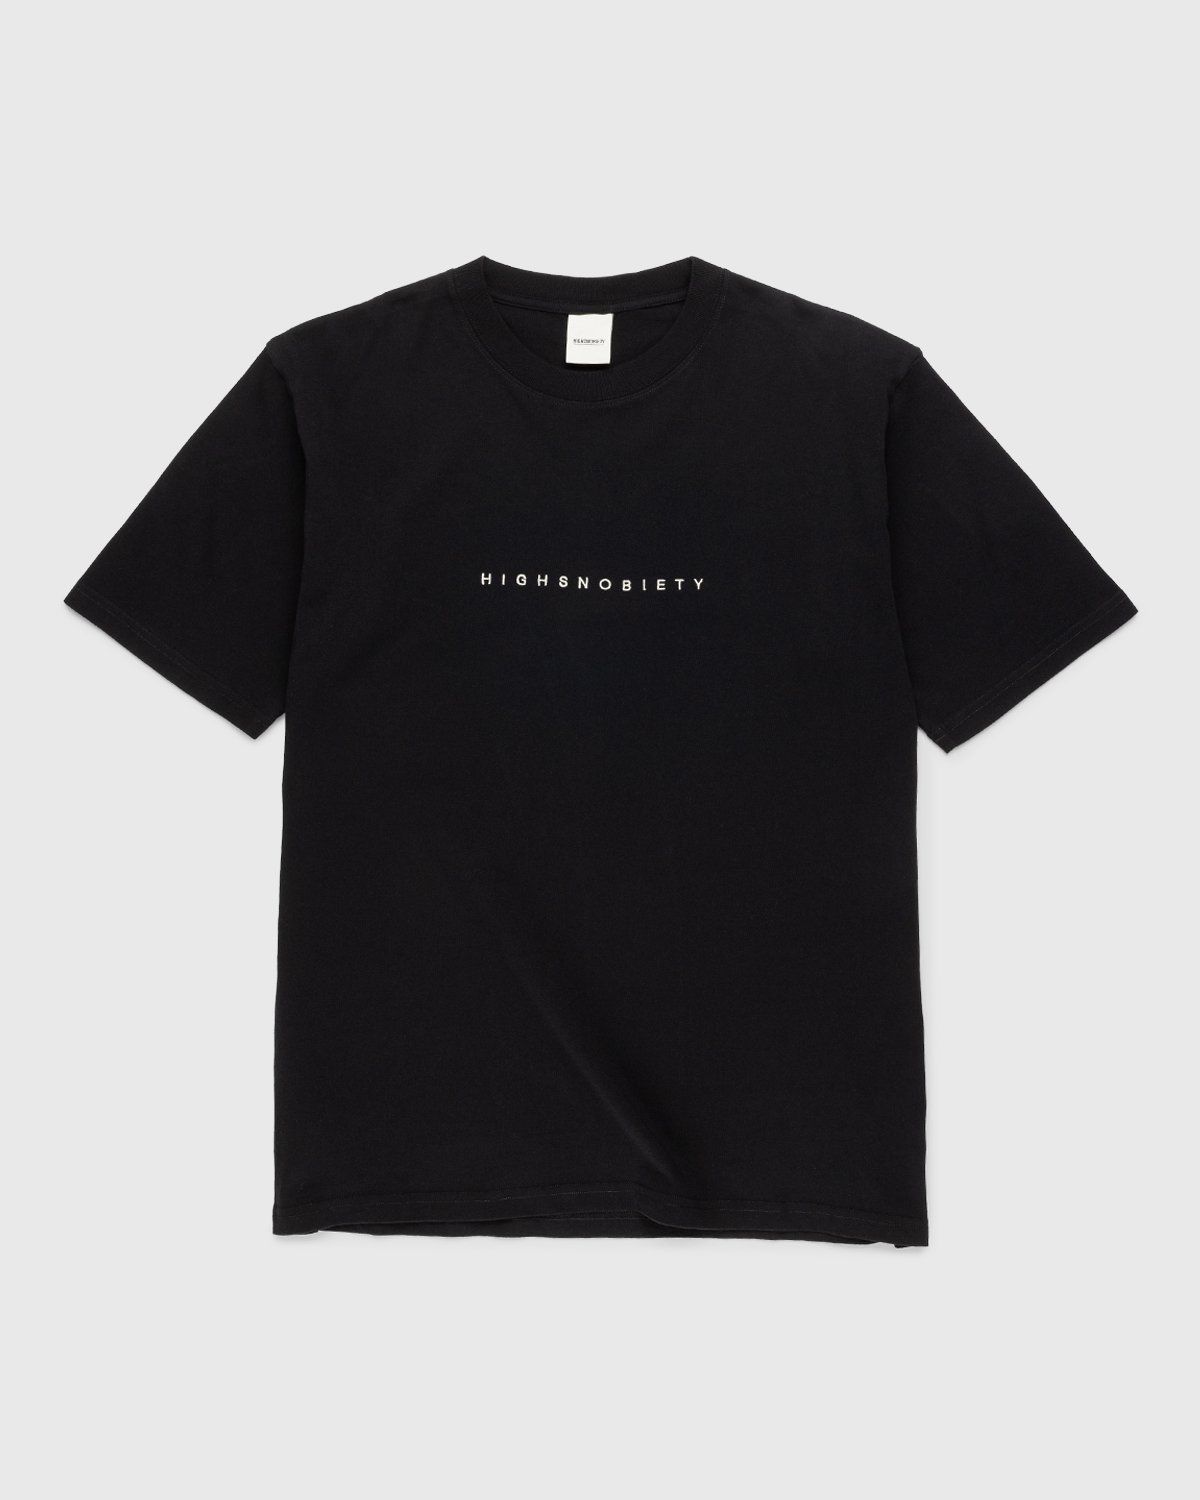 Highsnobiety – Staples T-Shirt Black - Image 1